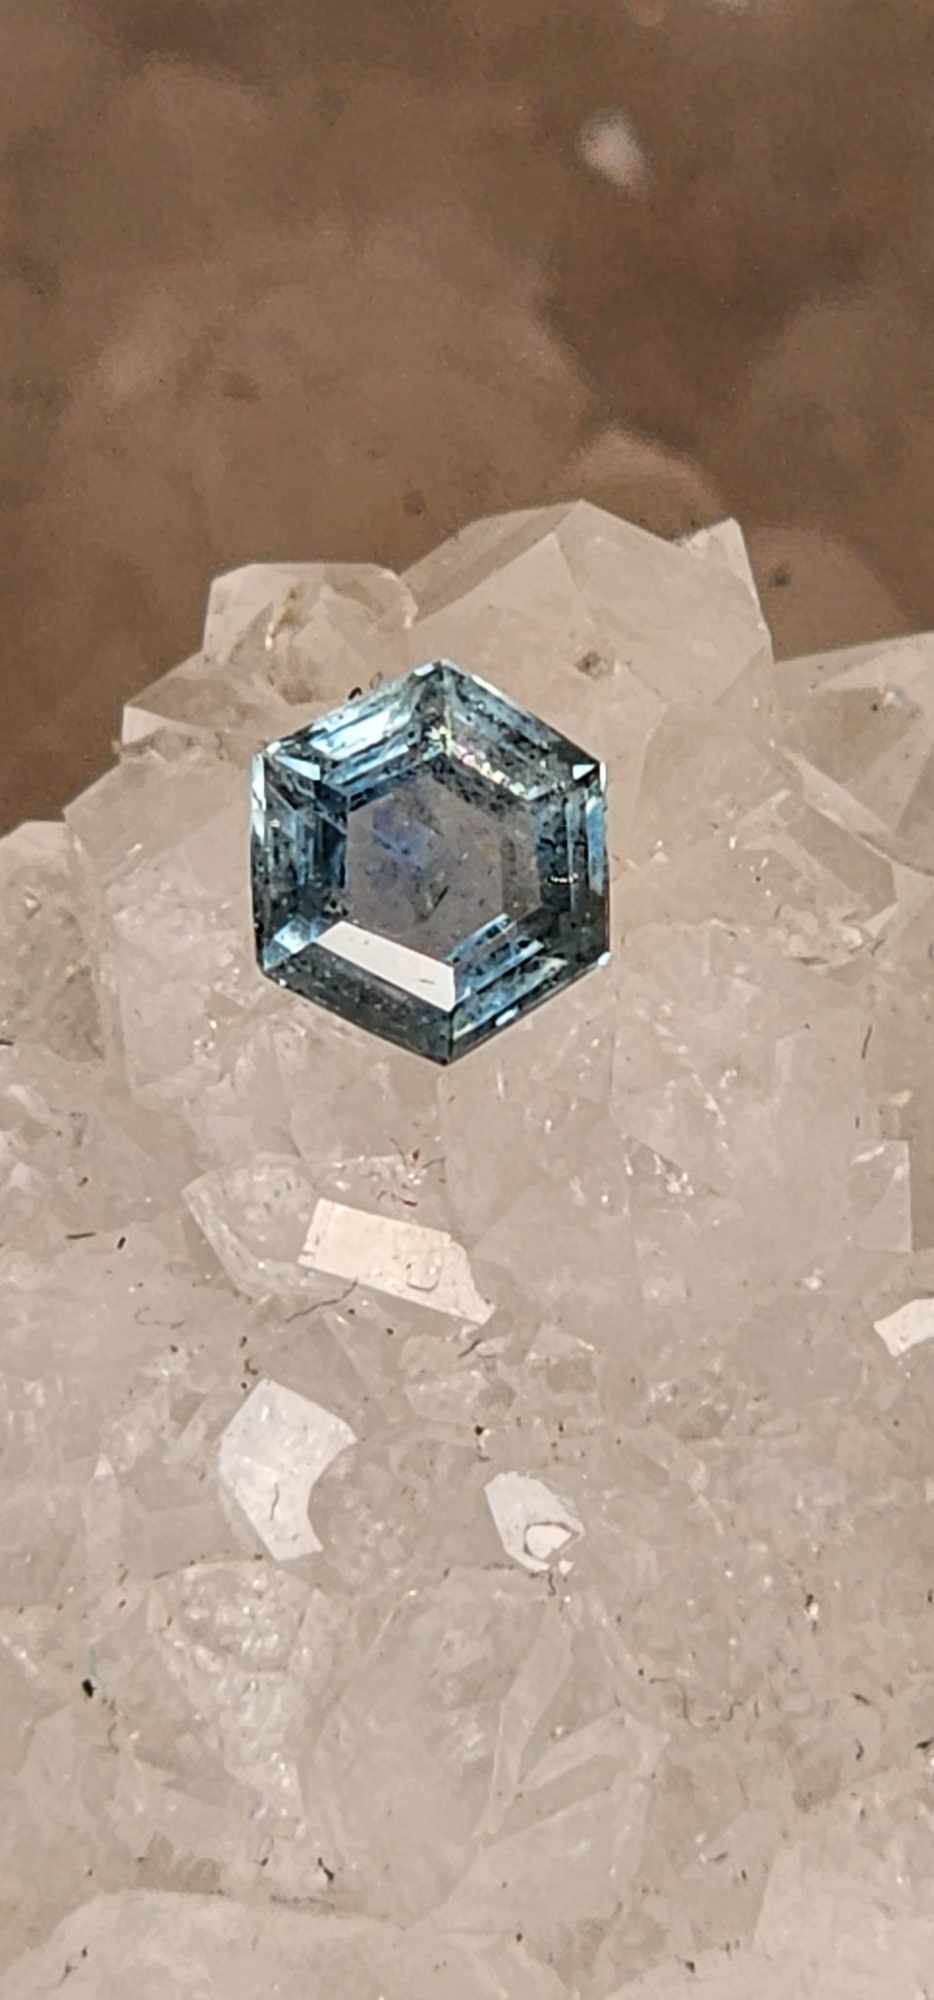 Montana Sapphire 1.01 CT Baby Blue Hexagon Cut